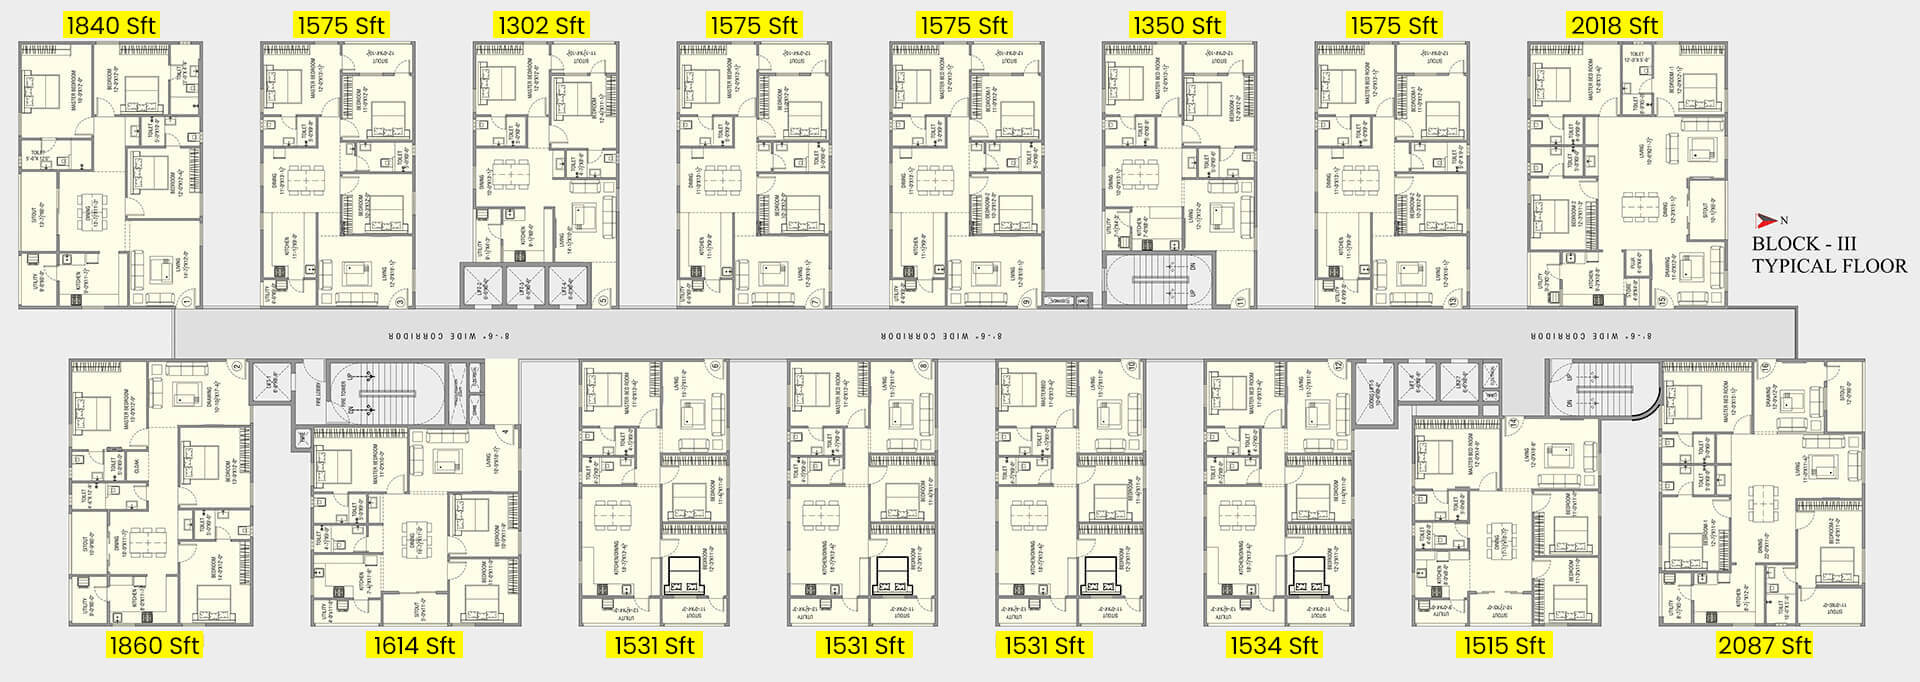 Block III Typical Floor Plan | MVV Green Field